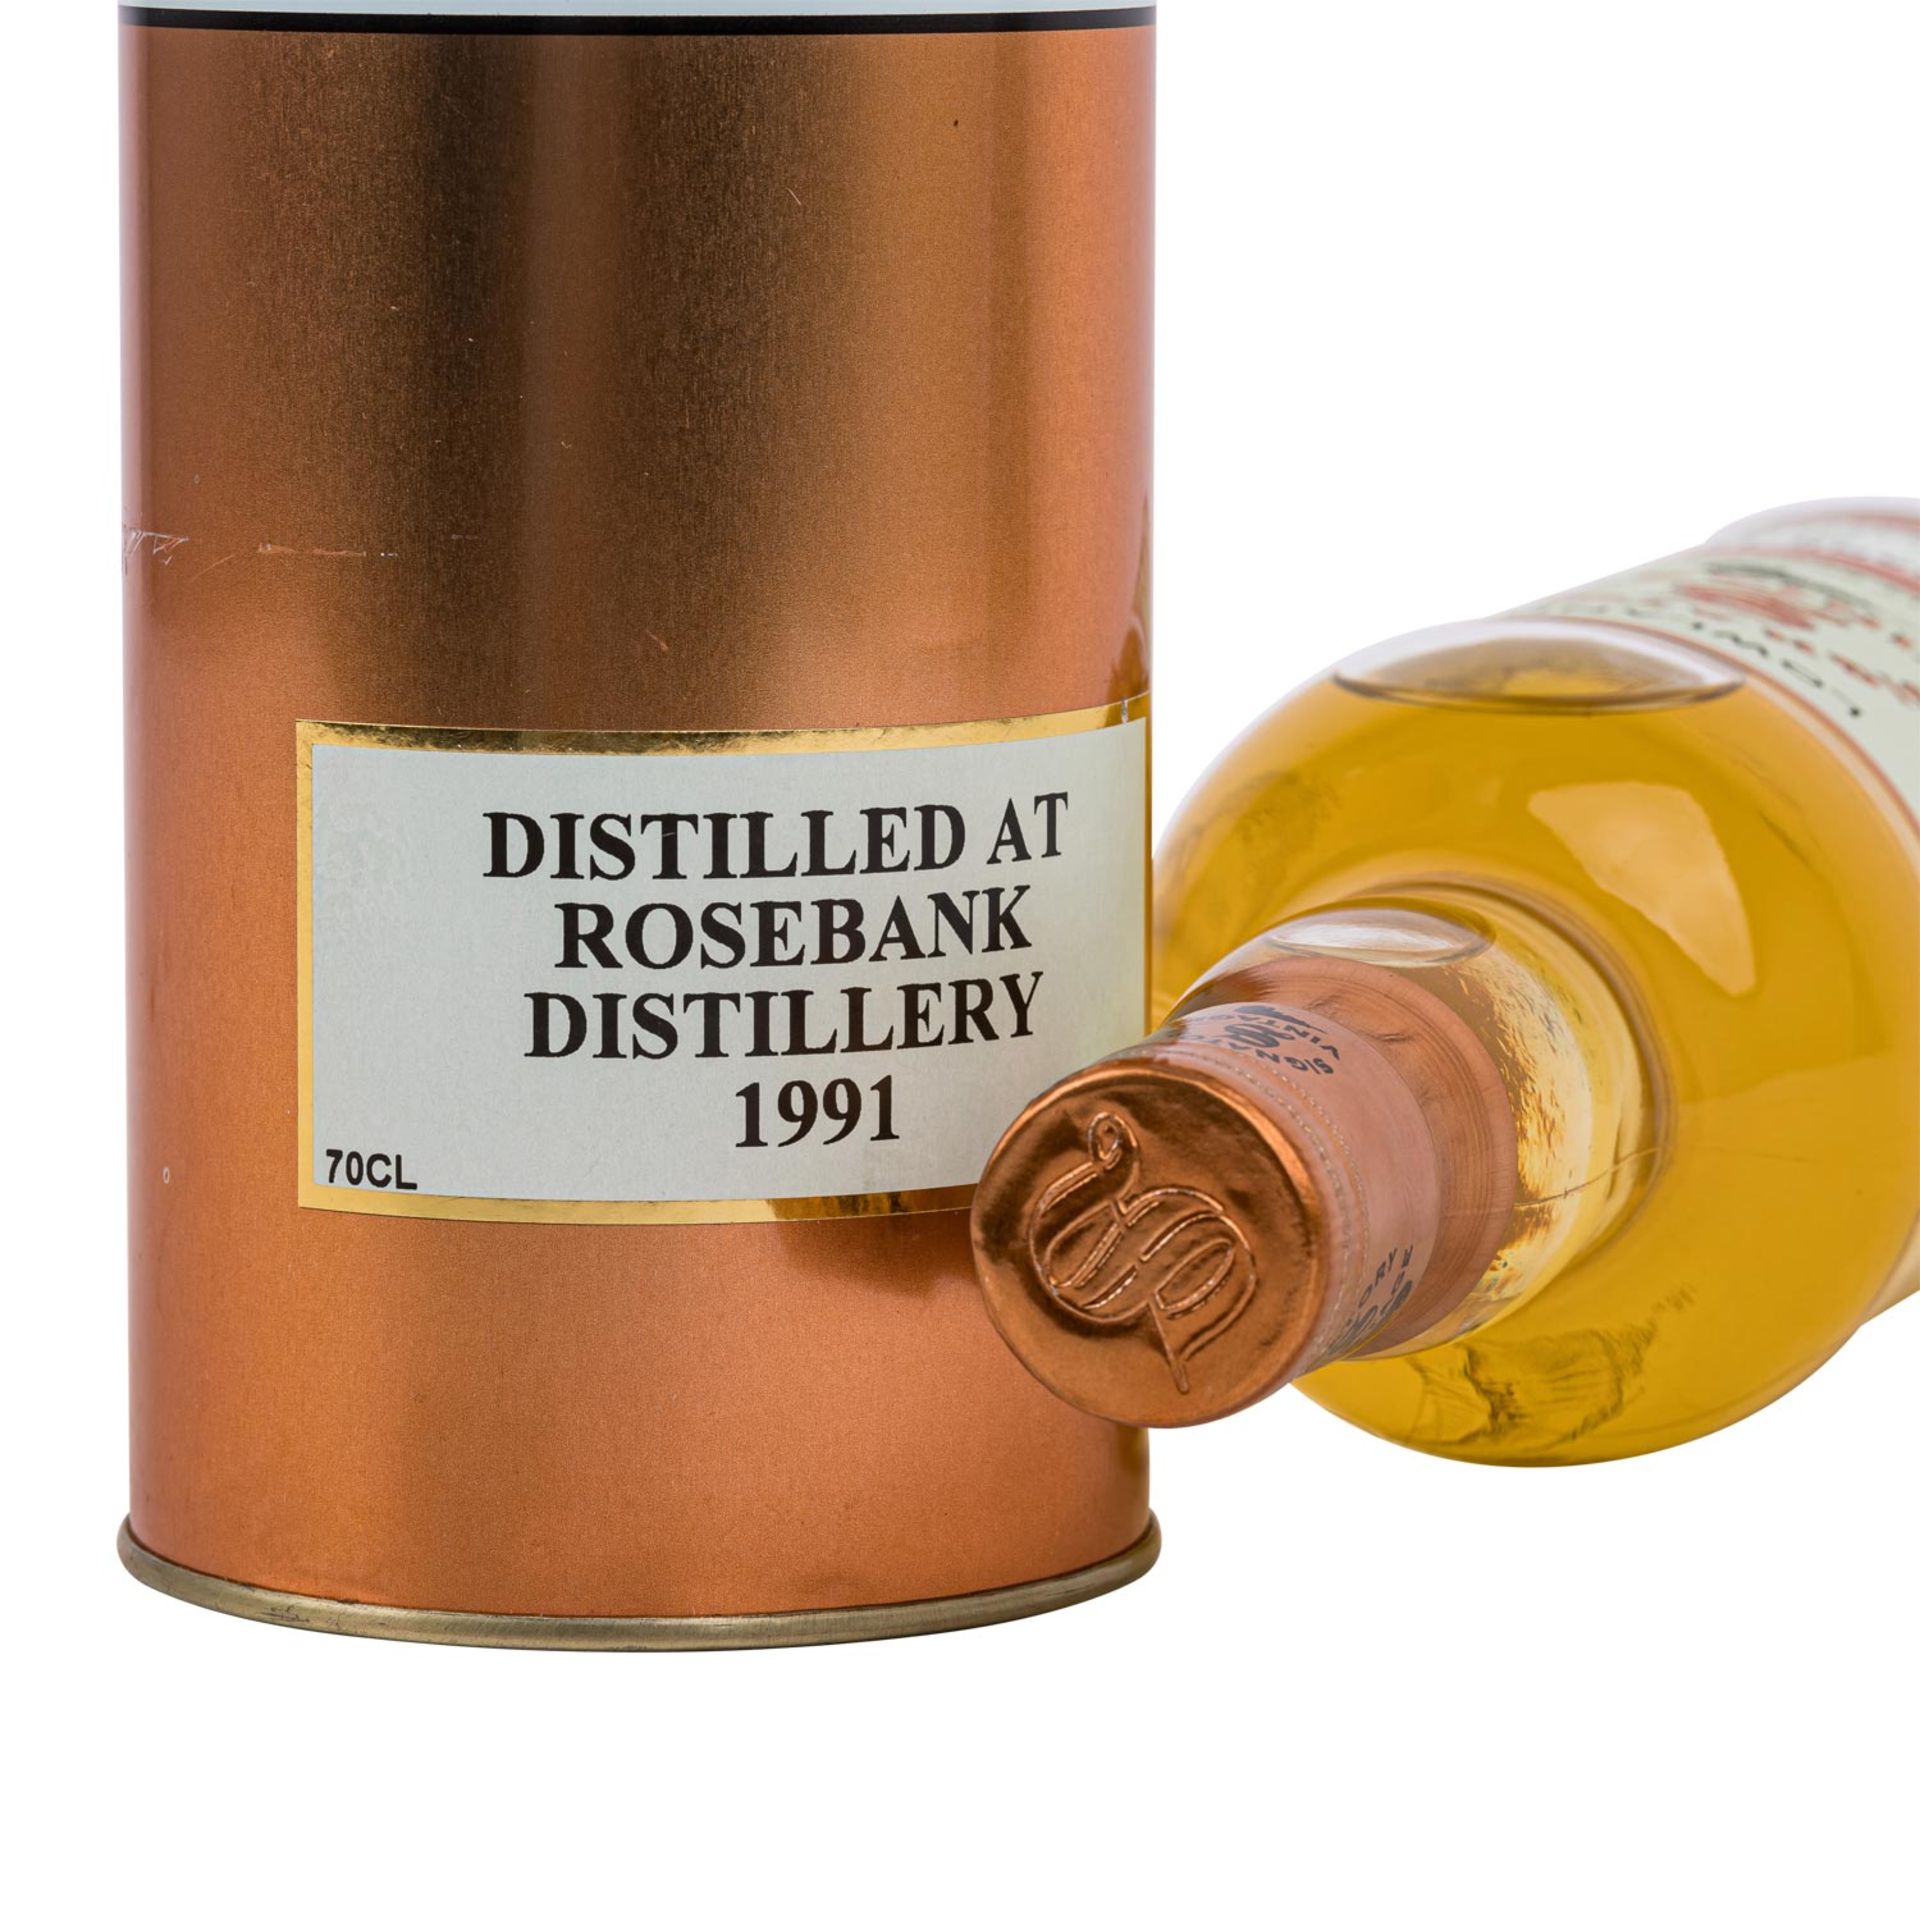 LOWLAND Sigantory Vintage Single Malt Scotch Whisky, Rosebank Distillery 1991 - Bild 3 aus 3